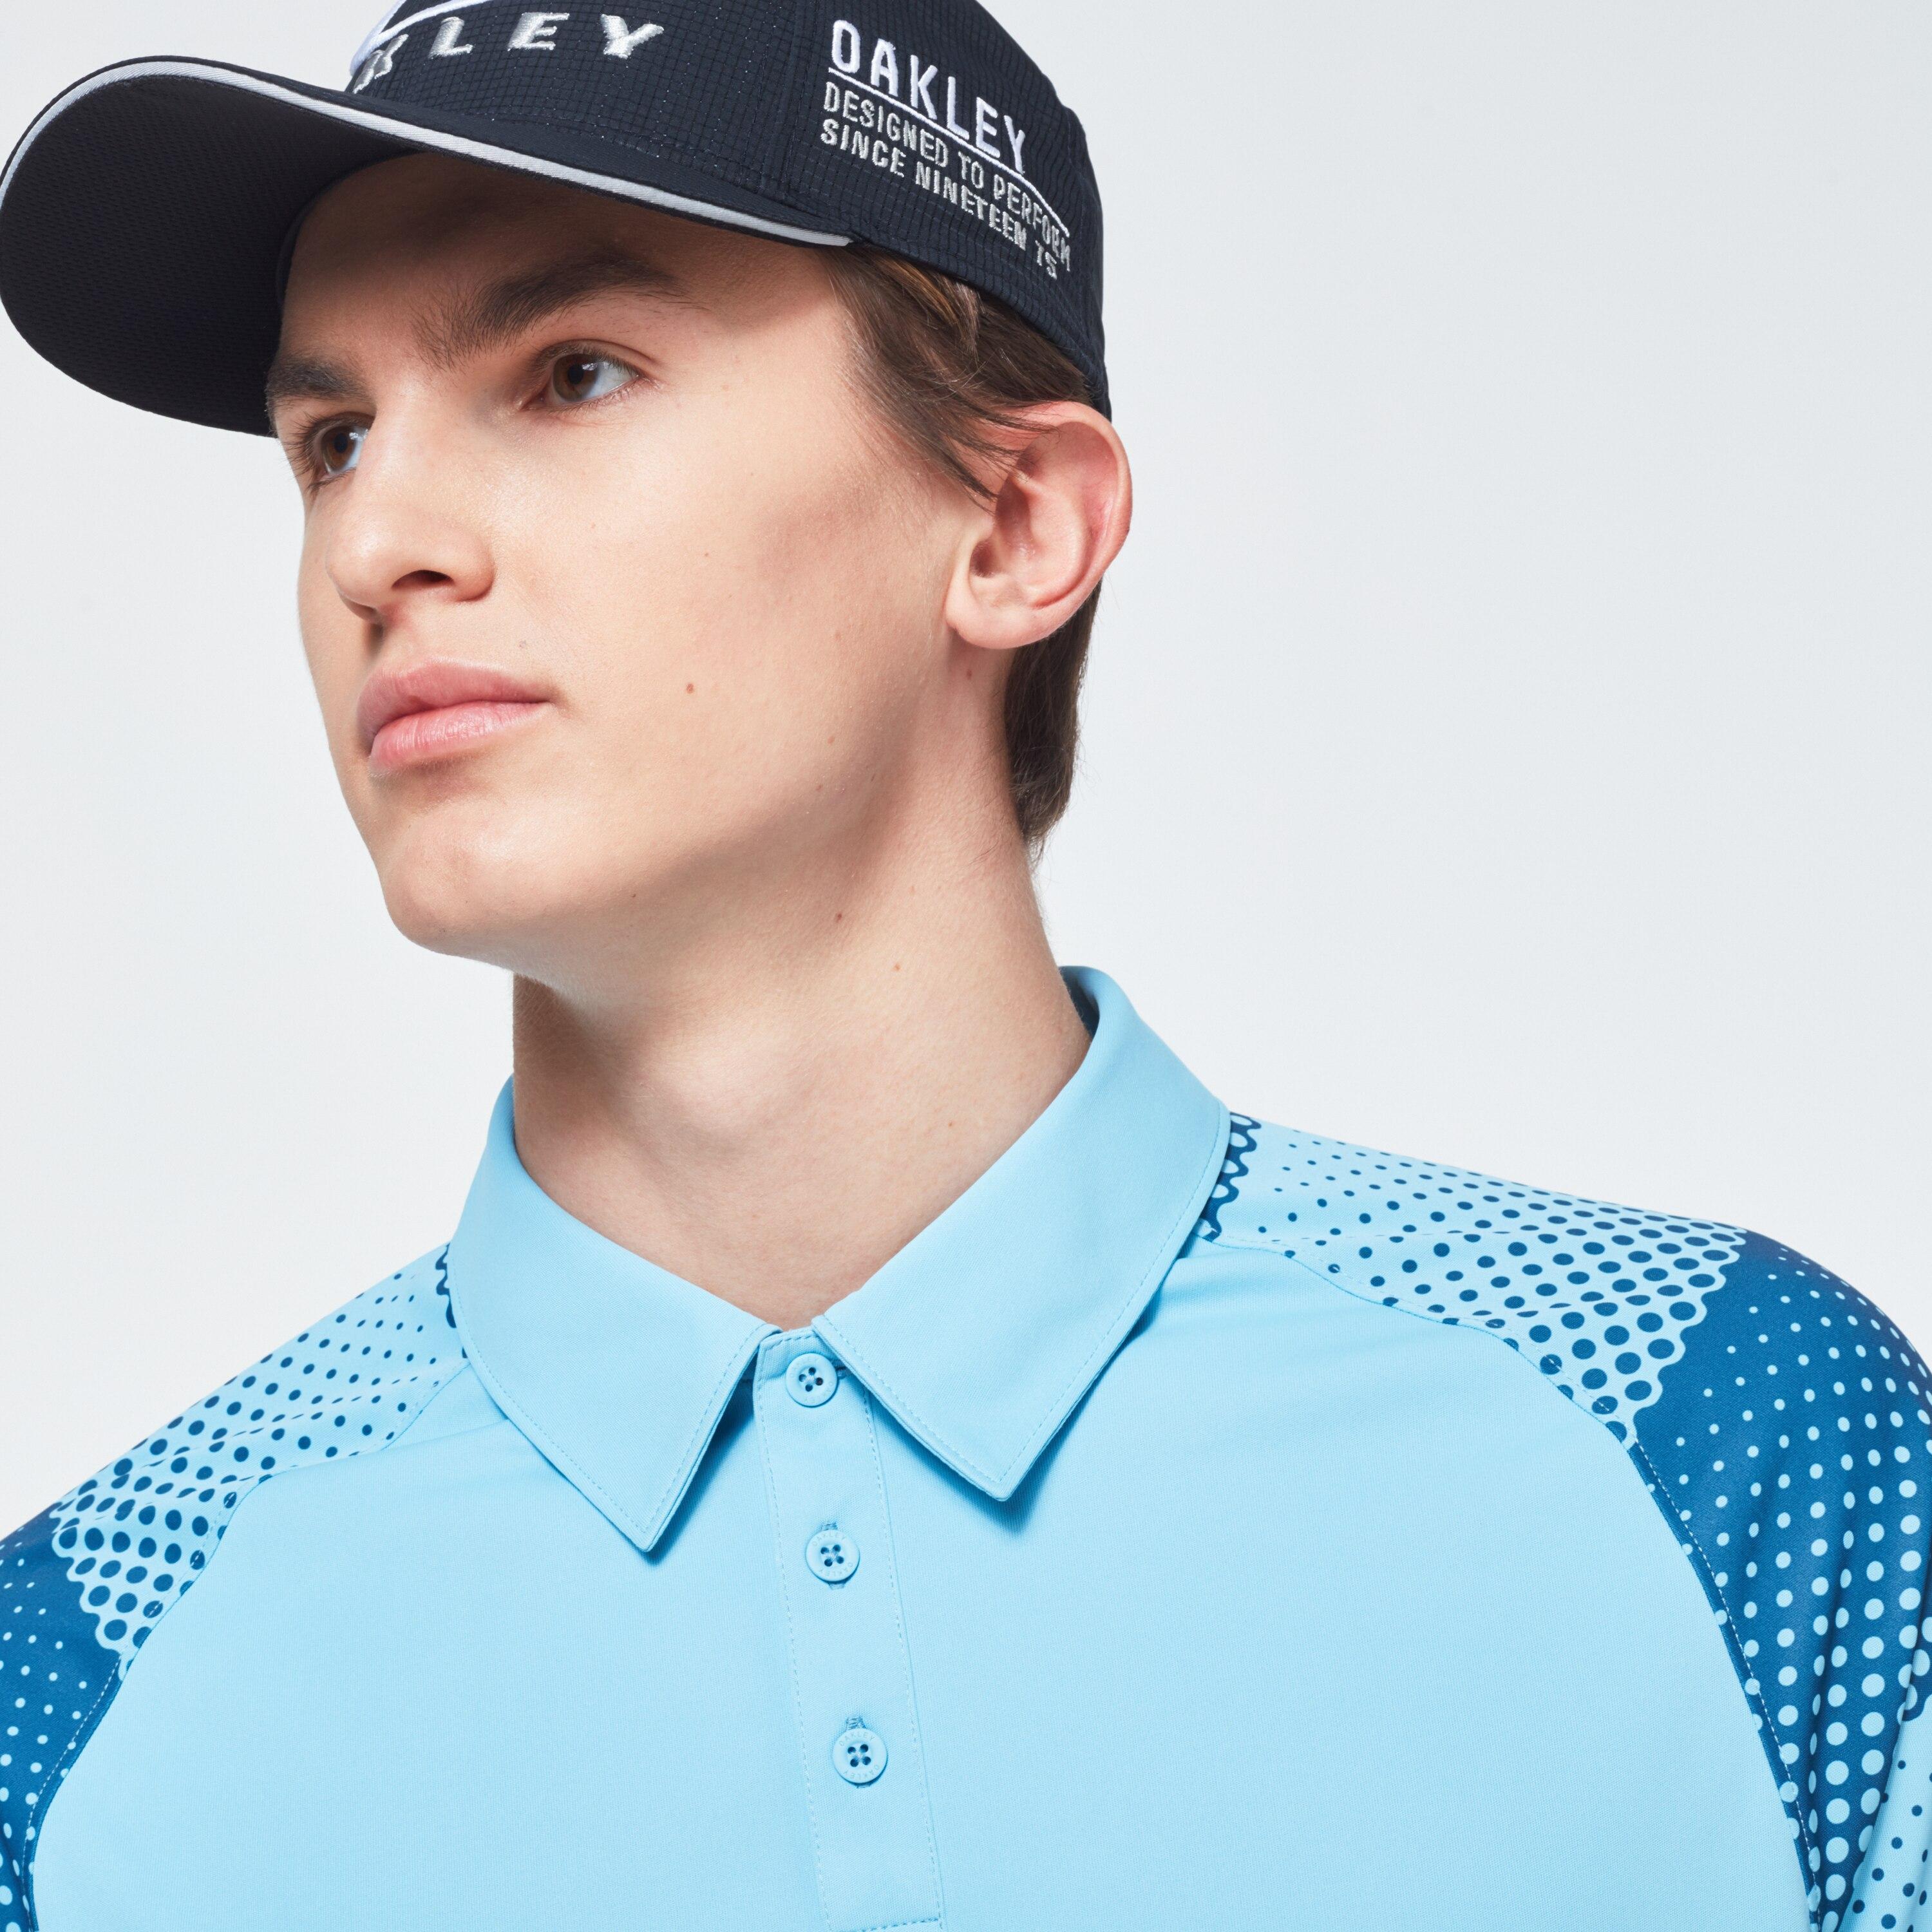 Oakley Synthetic Dot Sleeves Polo in Blue for Men - Lyst